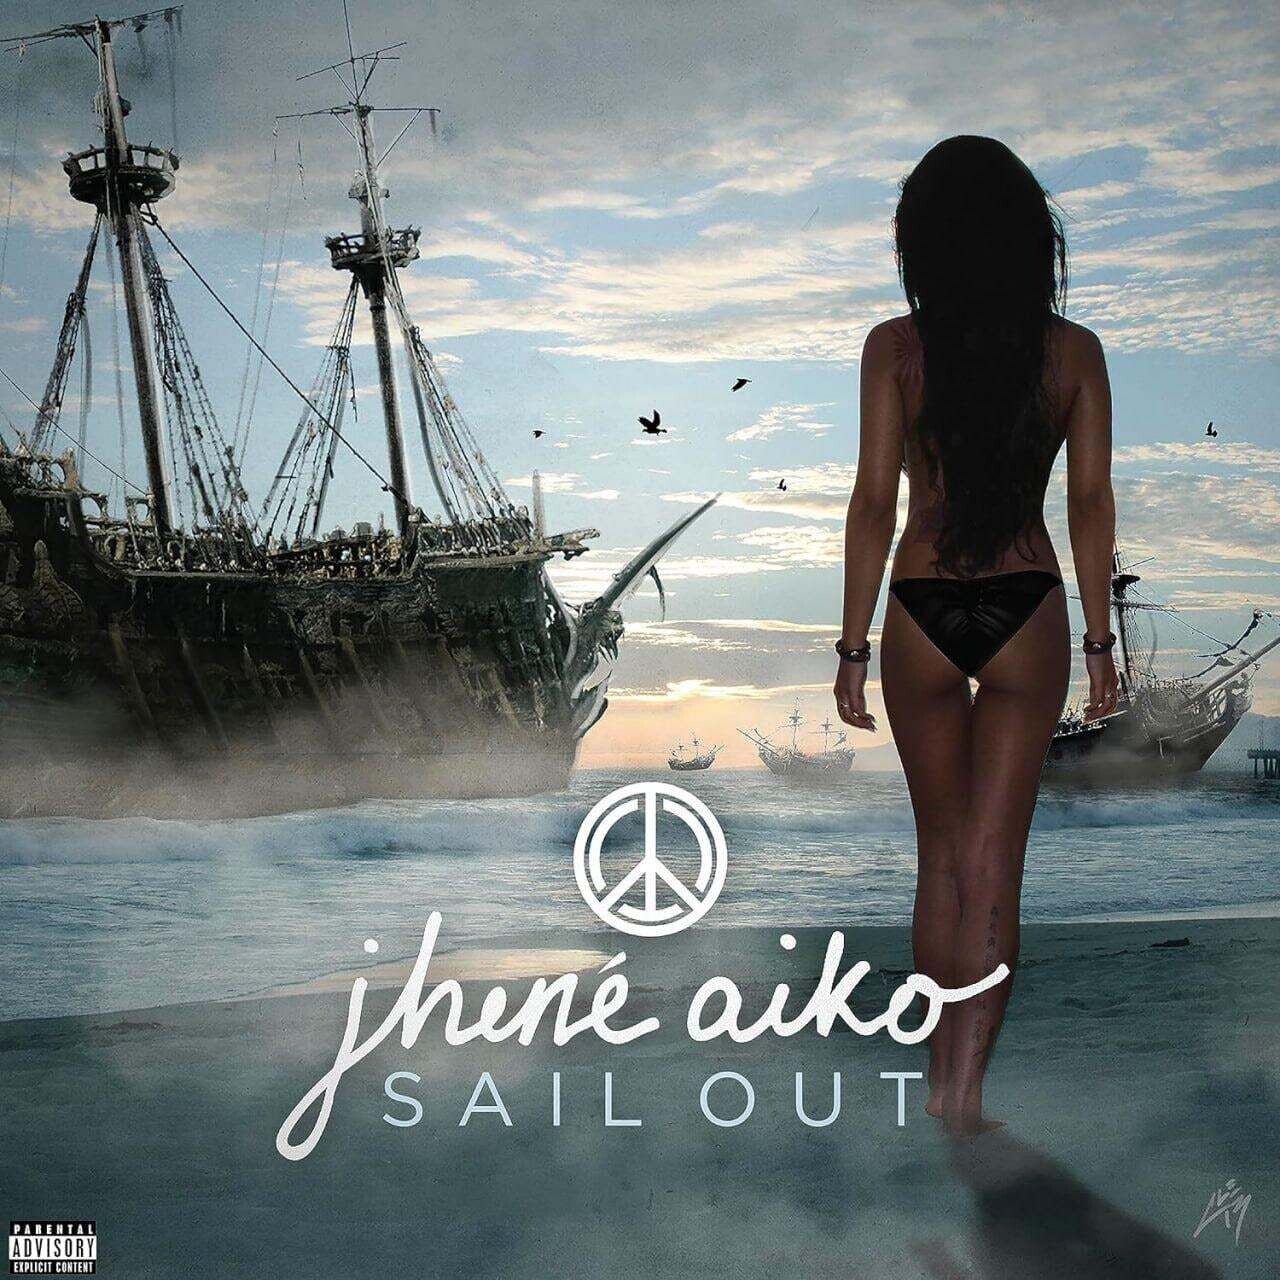 Jhene Aiko / Sail Out